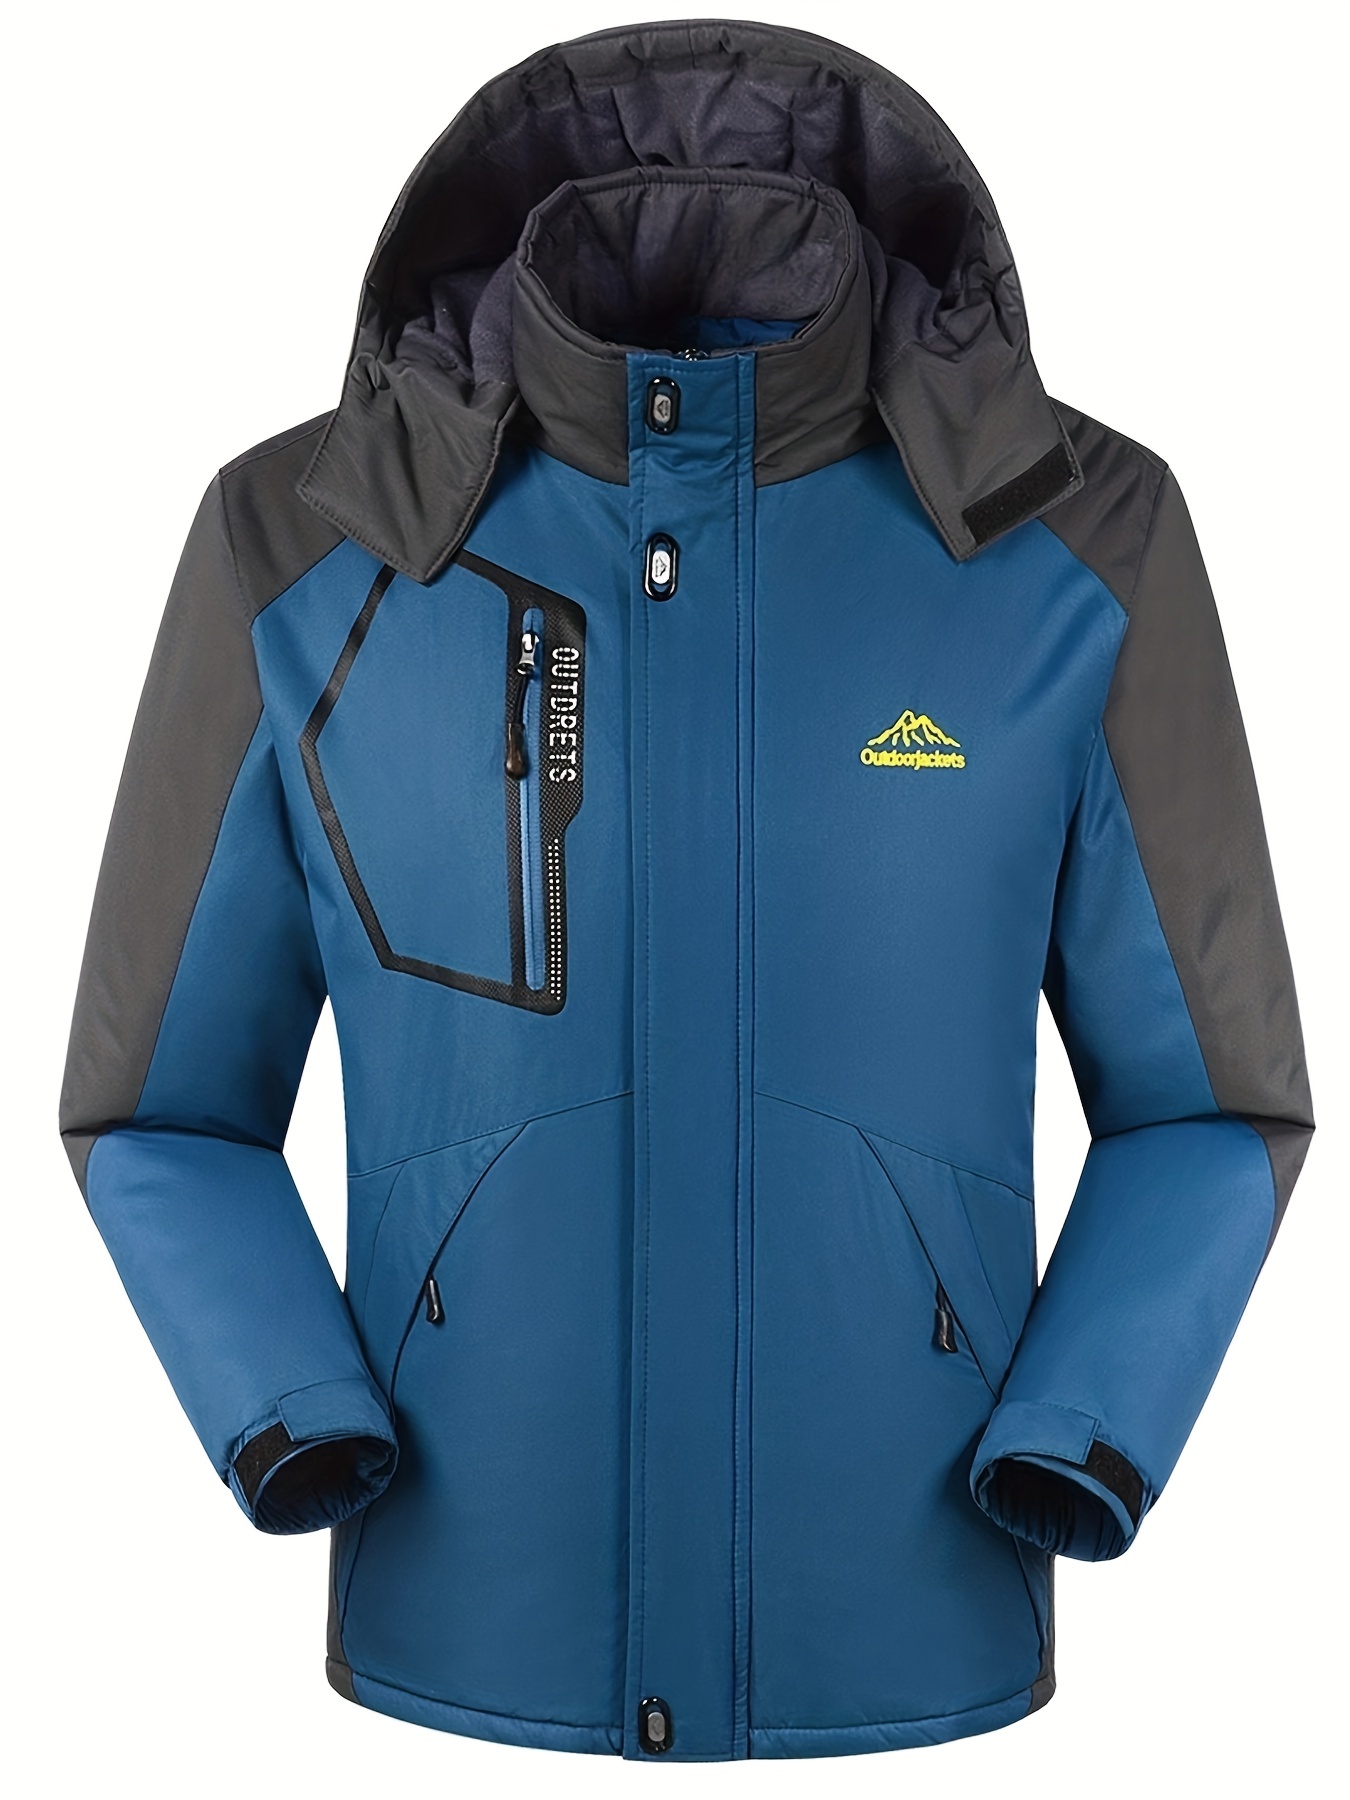 33,000ft Chaqueta de esquí impermeable 3 en 1 para hombre, chaqueta de  esquí cálida de montaña, chaqueta de lluvia para nieve, abrigo de invierno  con